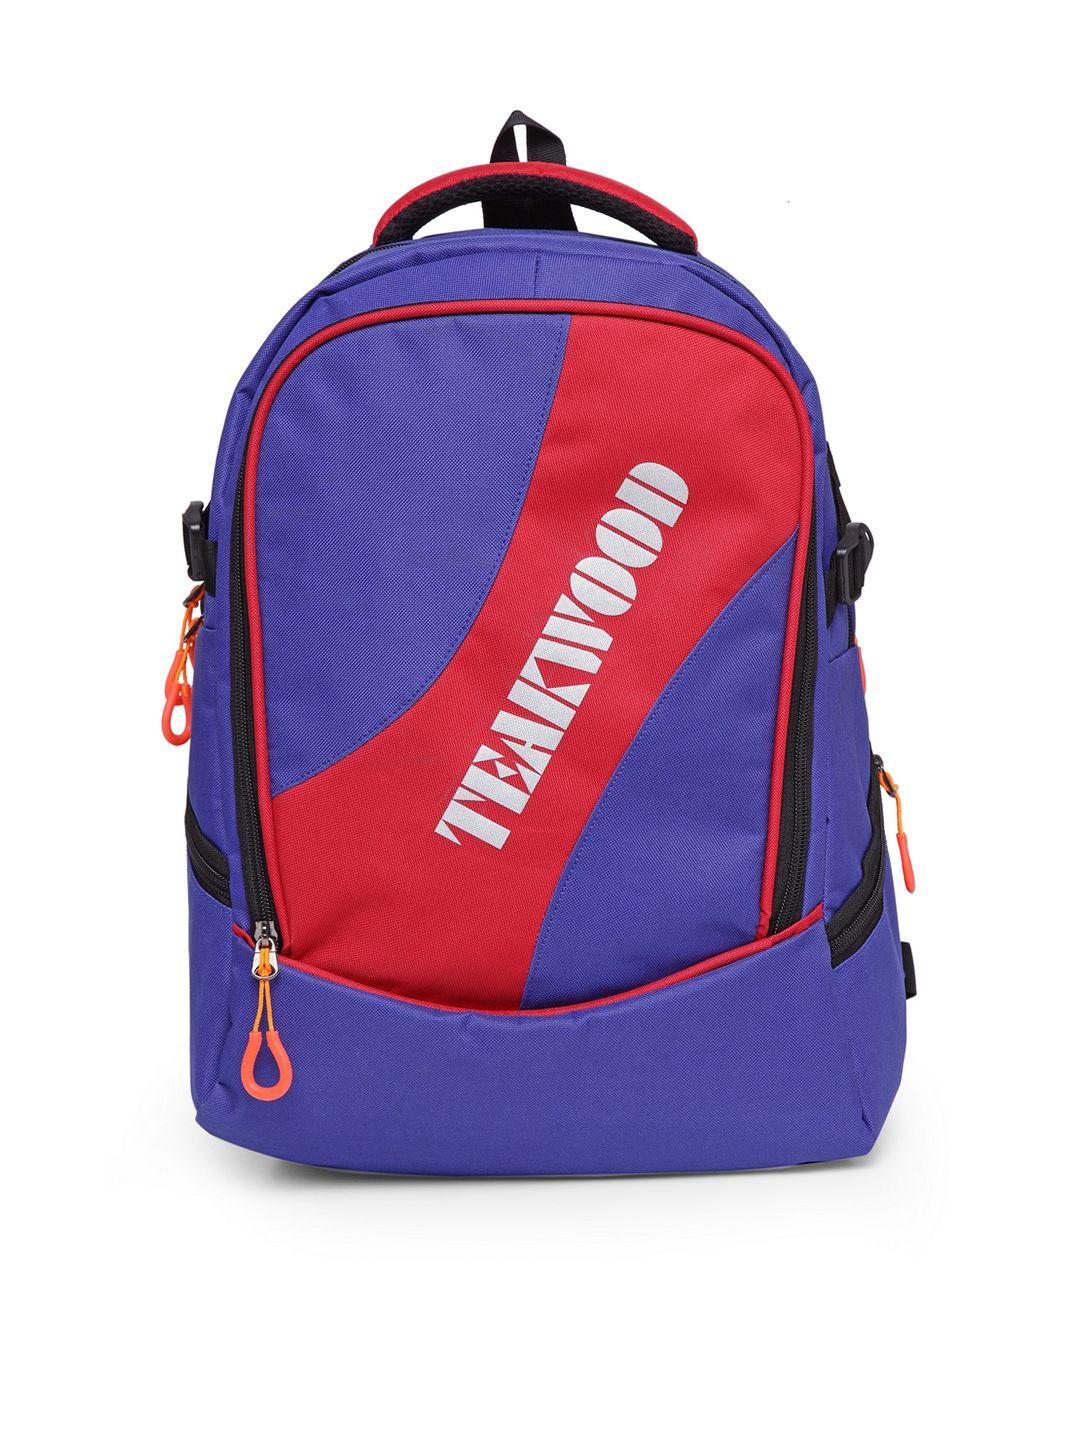 teakwood leathers unisex violet & red colourblocked backpack